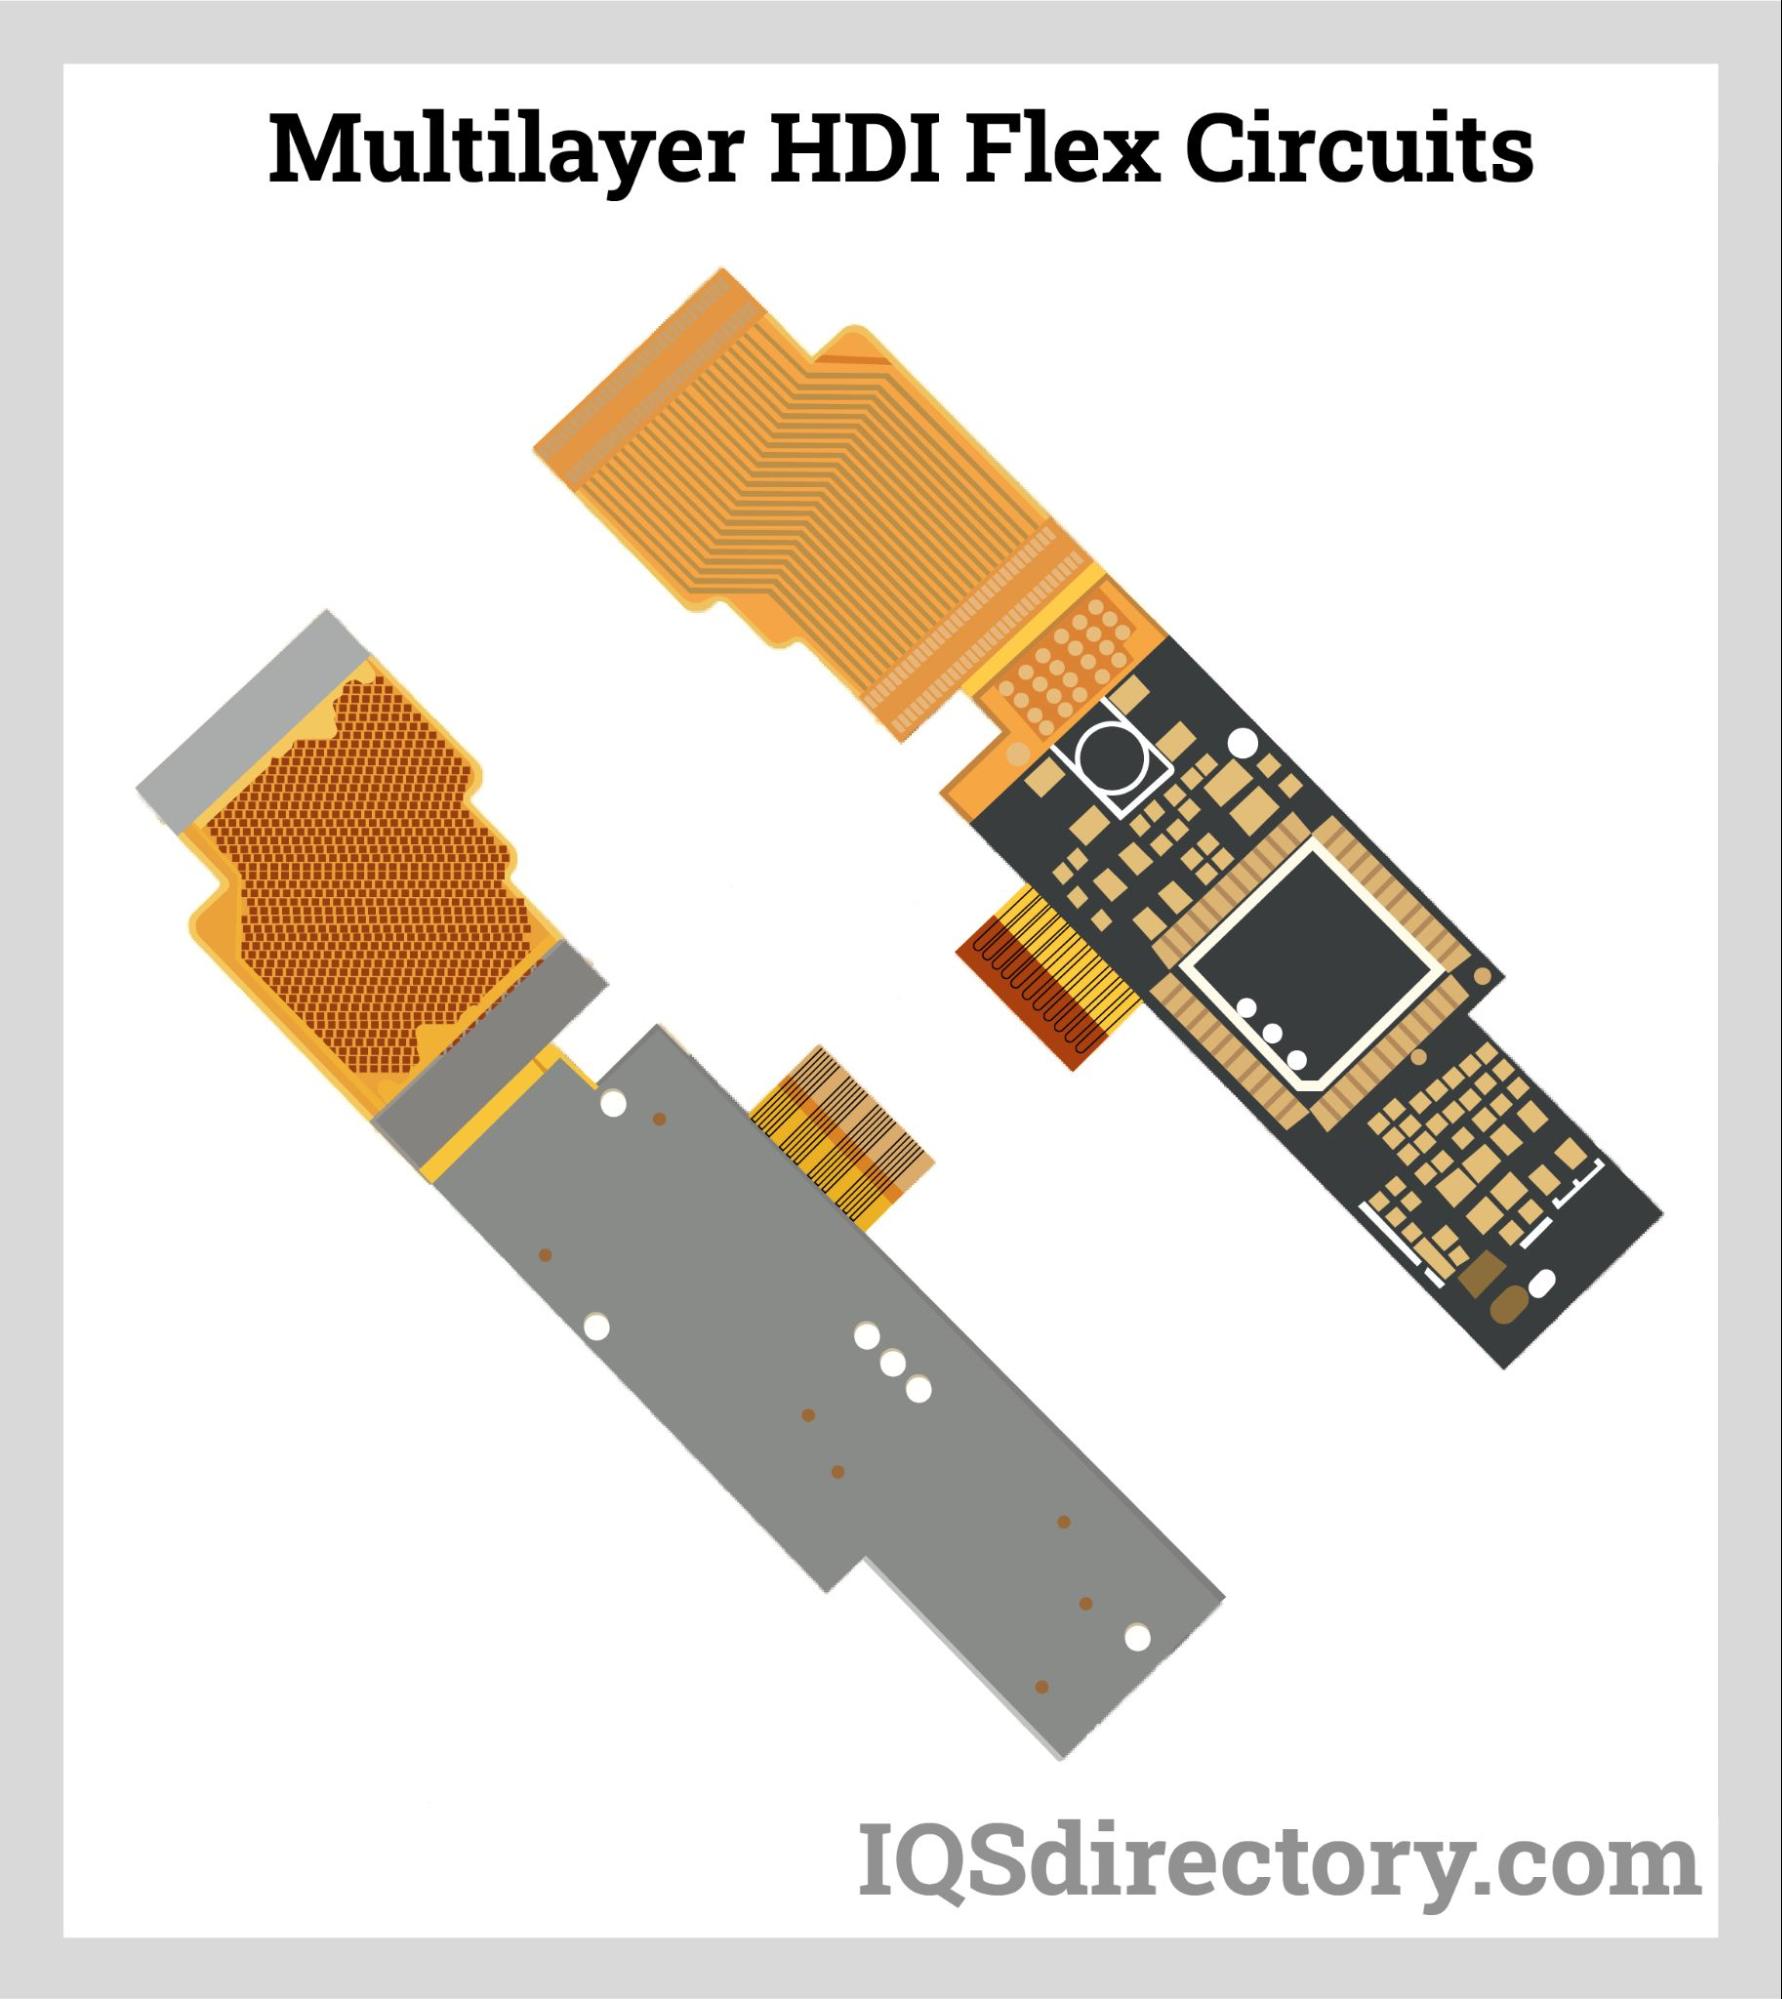 Multilayer HDI Flex Circuits